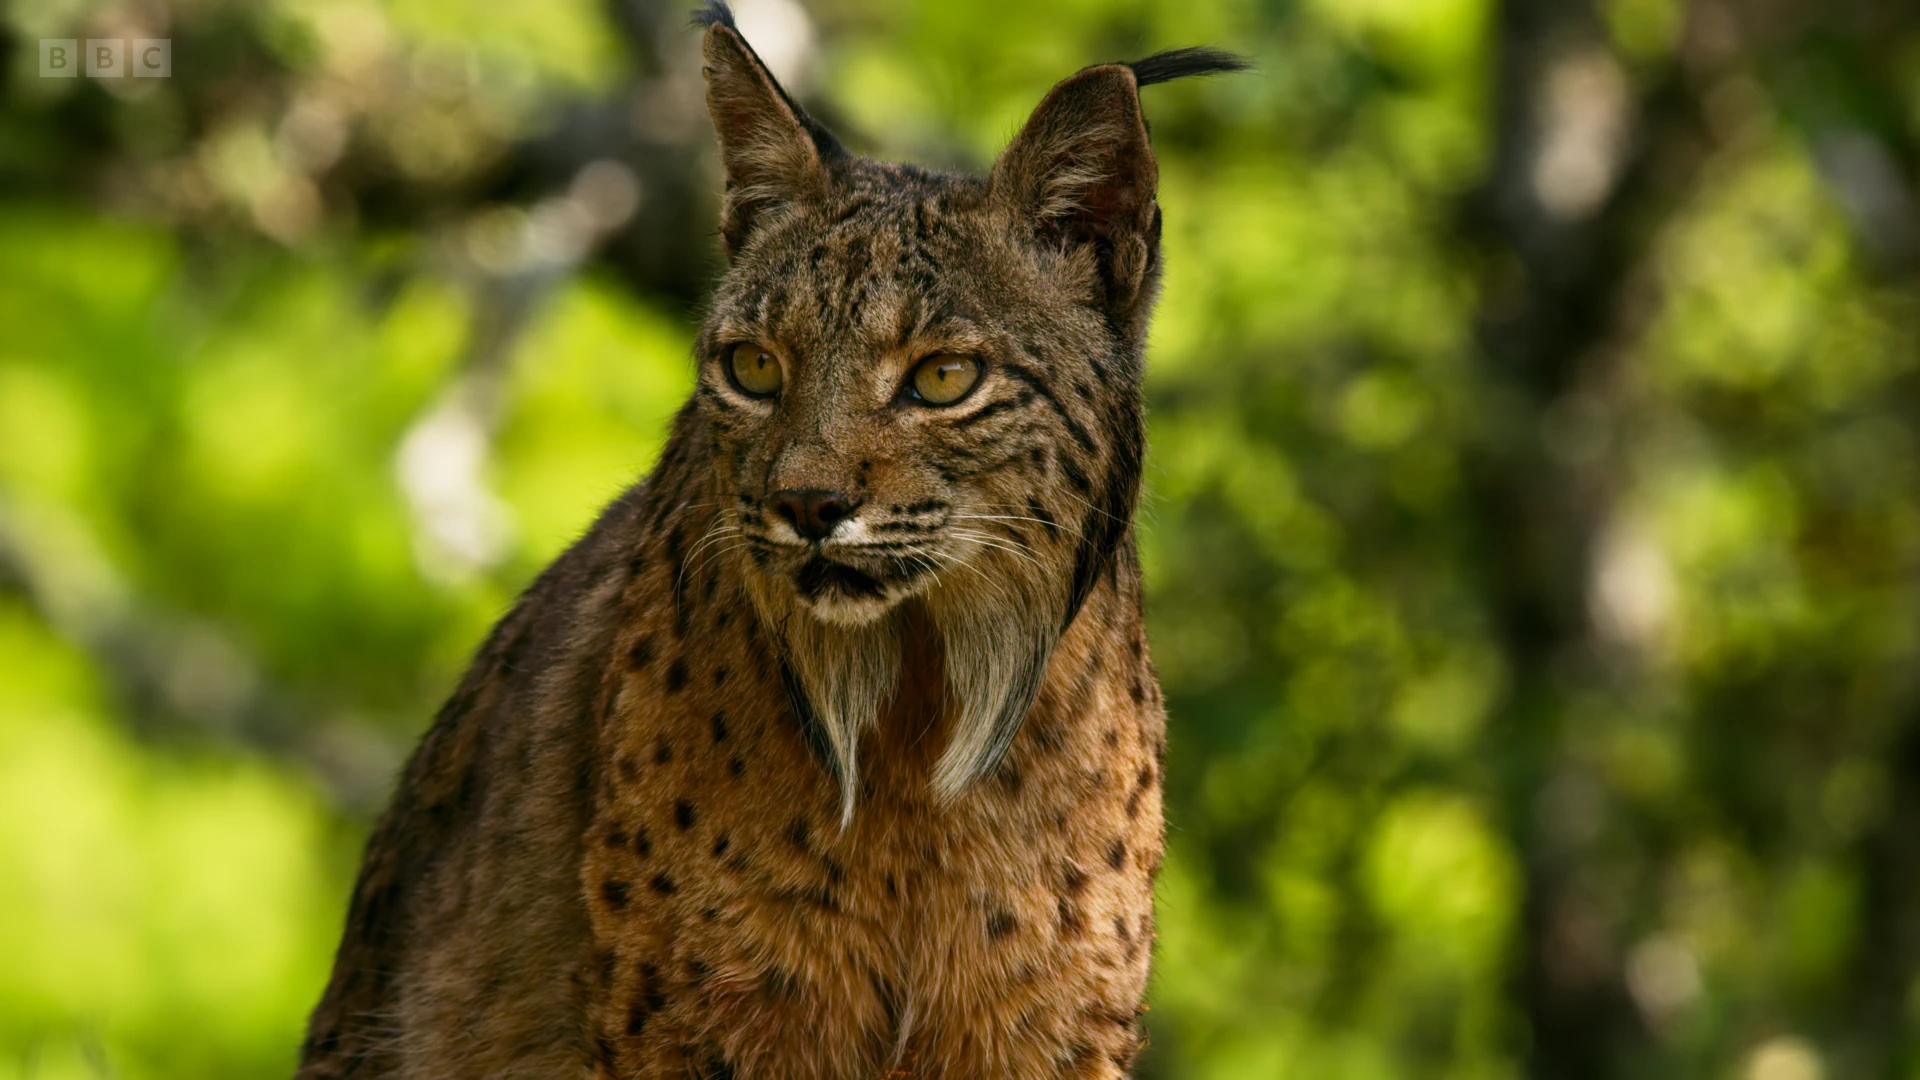 Iberian lynx (Lynx pardinus) as shown in Seven Worlds, One Planet - Europe